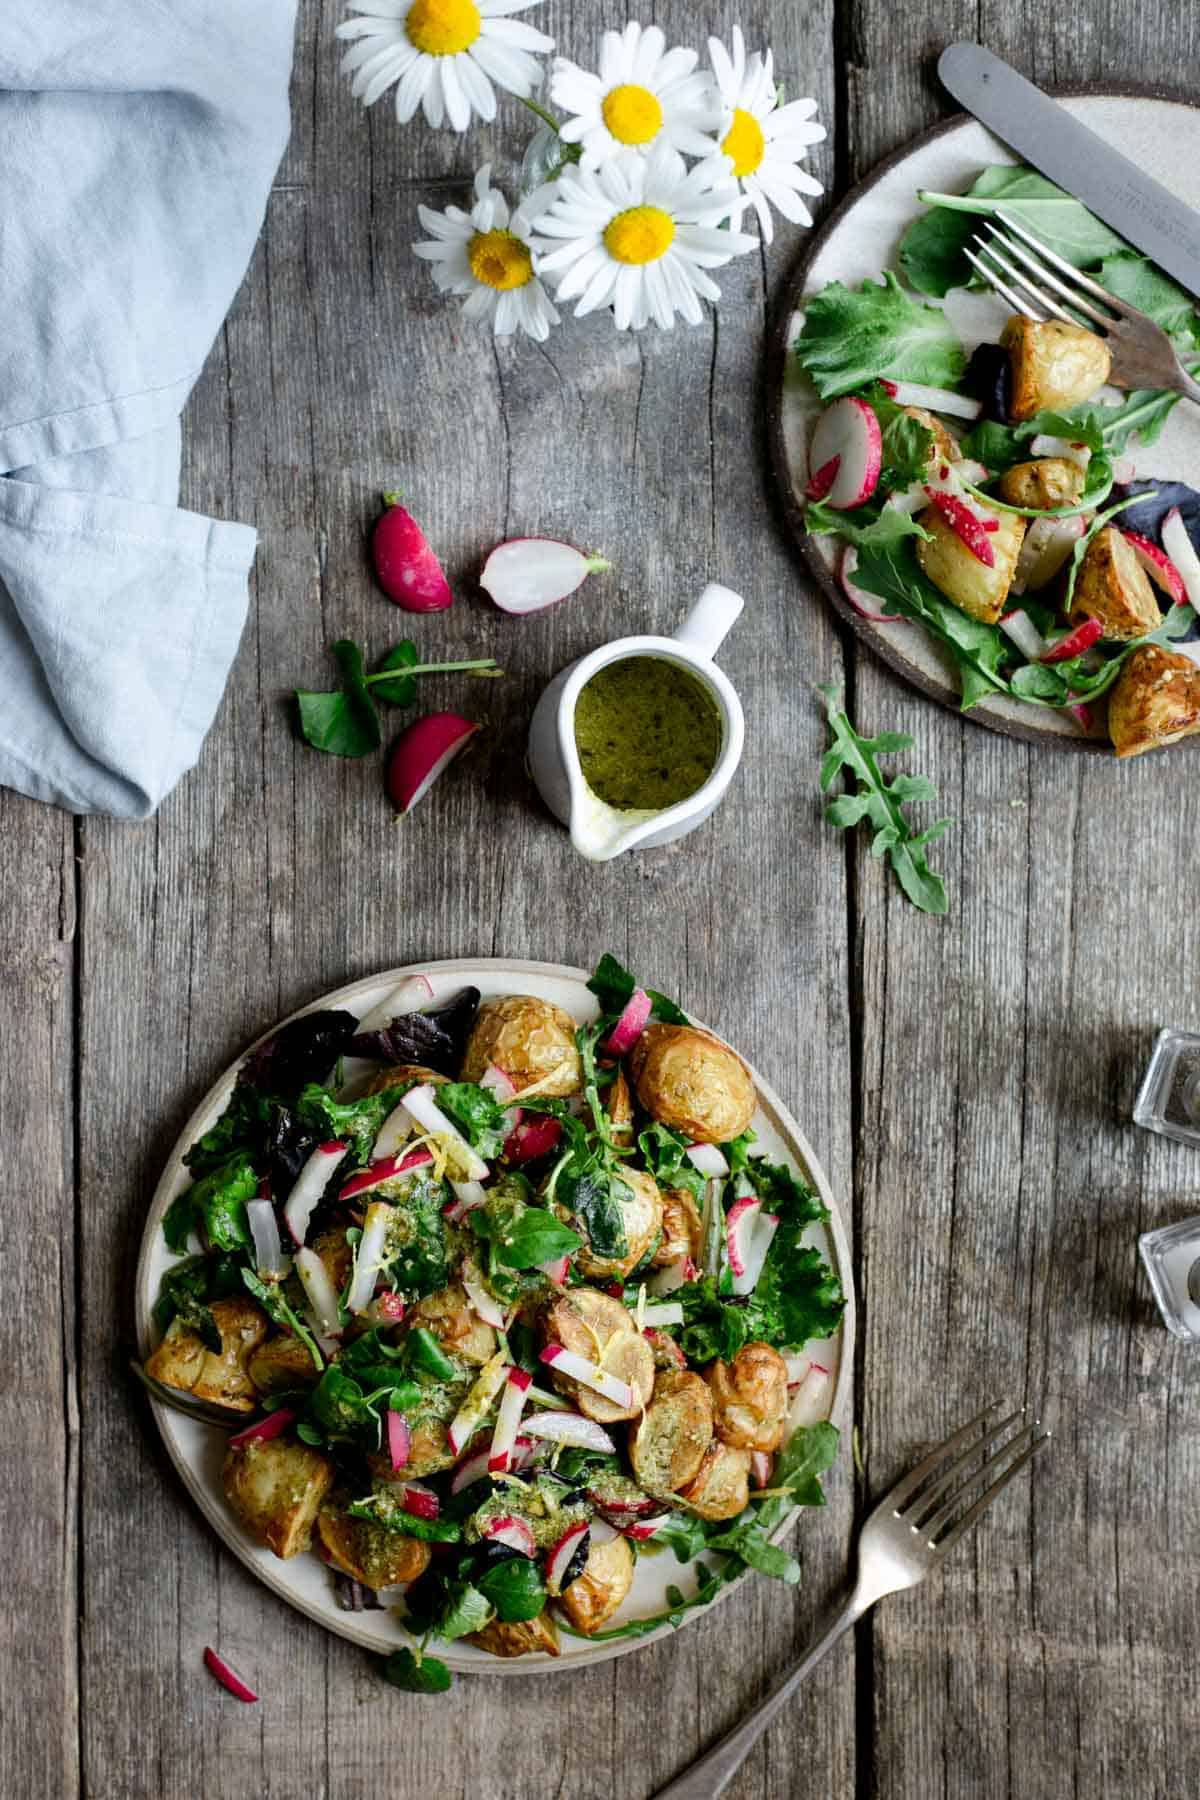 Roasted new potato salad, perfect summer lunch or dinner! #veganrecipe #healthymeal #newpotatosalad | via @annabanana.co